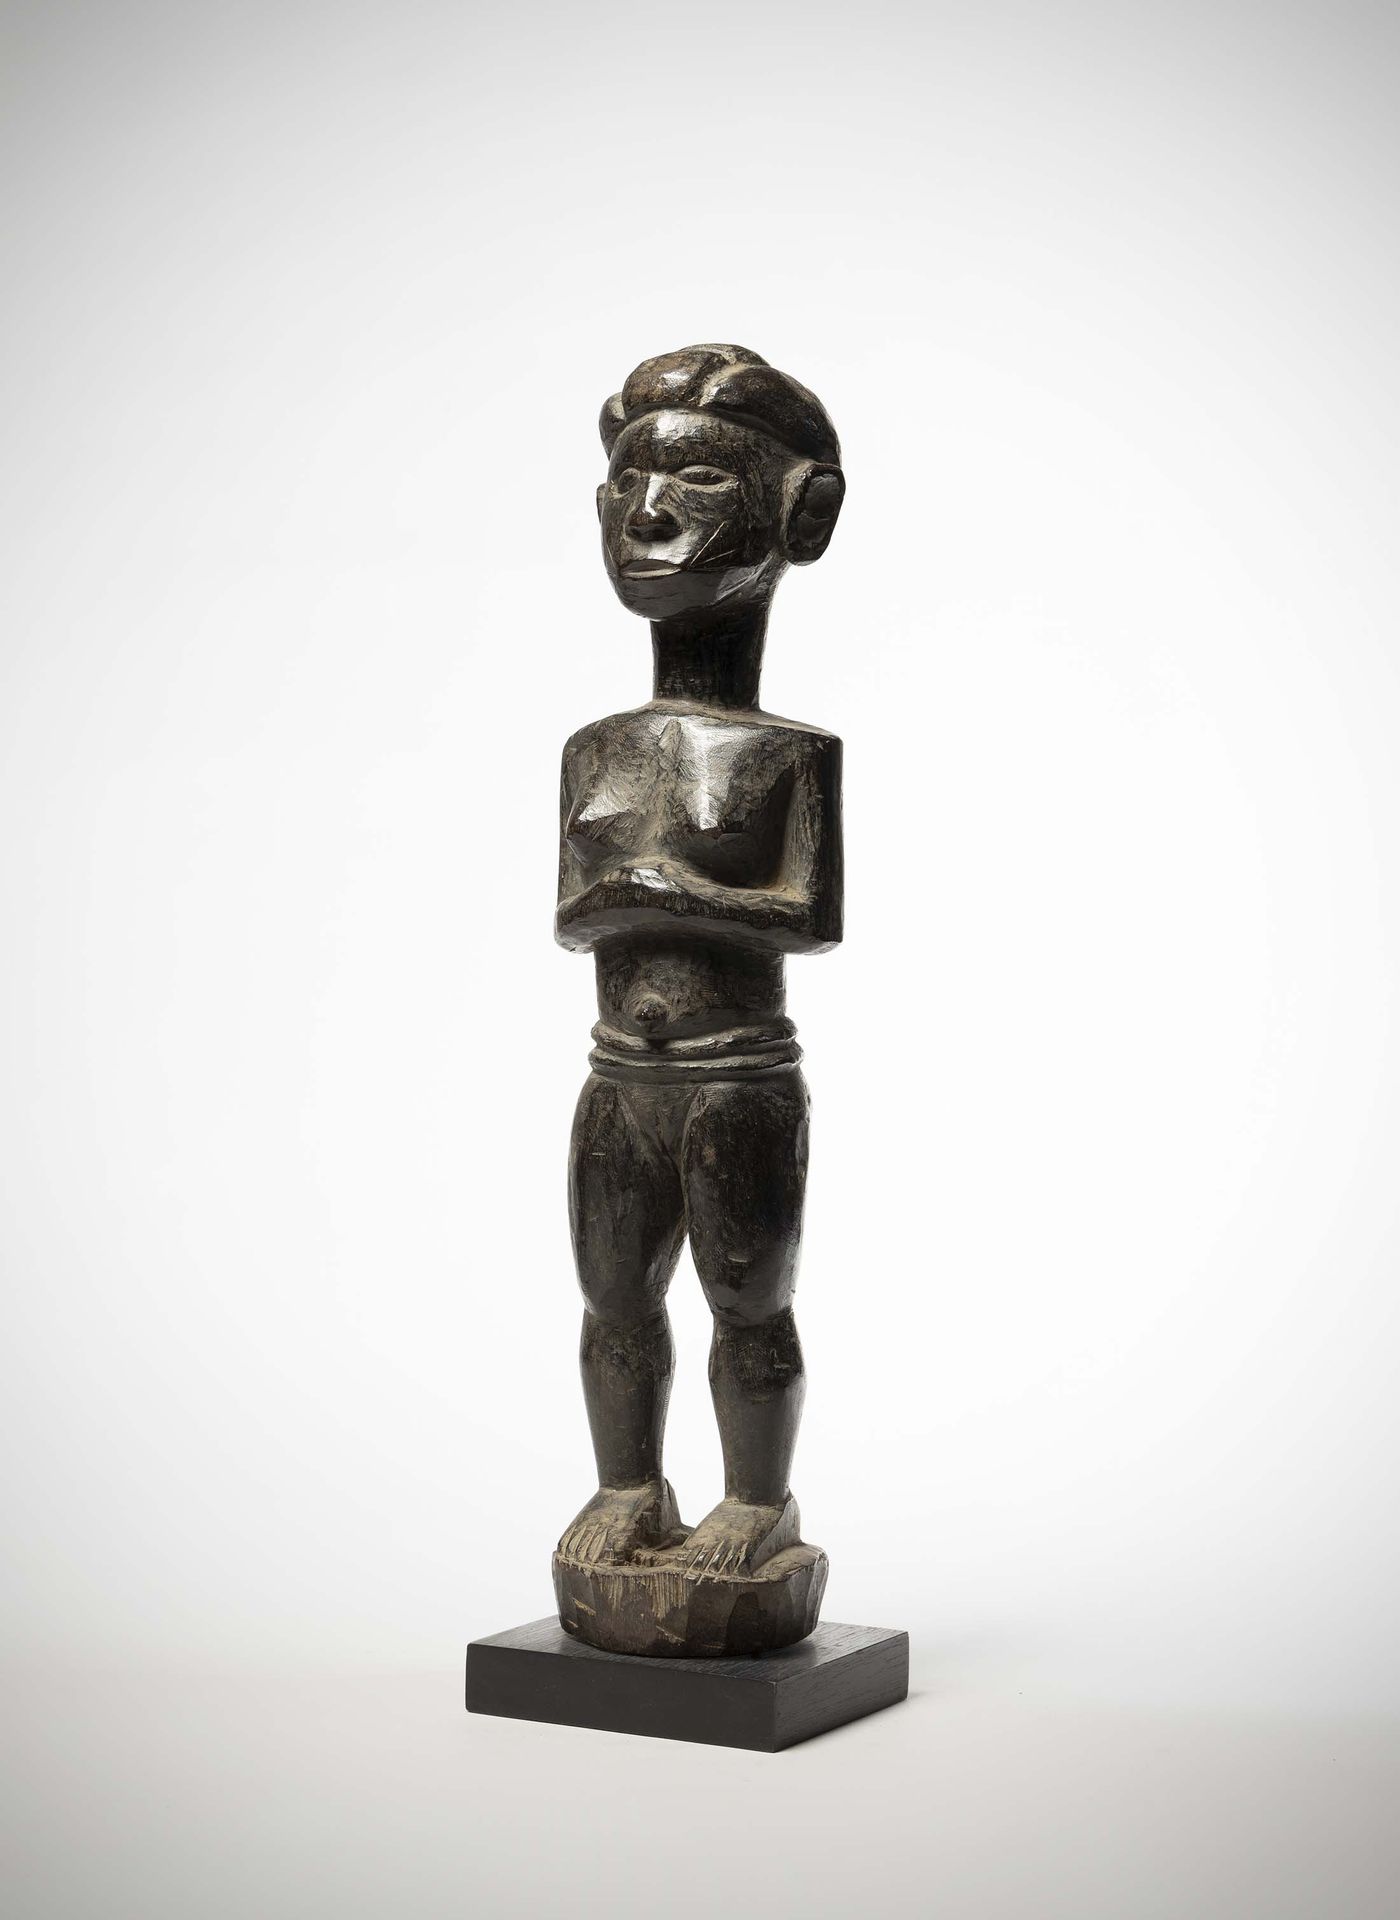 Null Tiv

(Nigeria) Statua femminile in legno pesante con patina nera lucida.

Q&hellip;